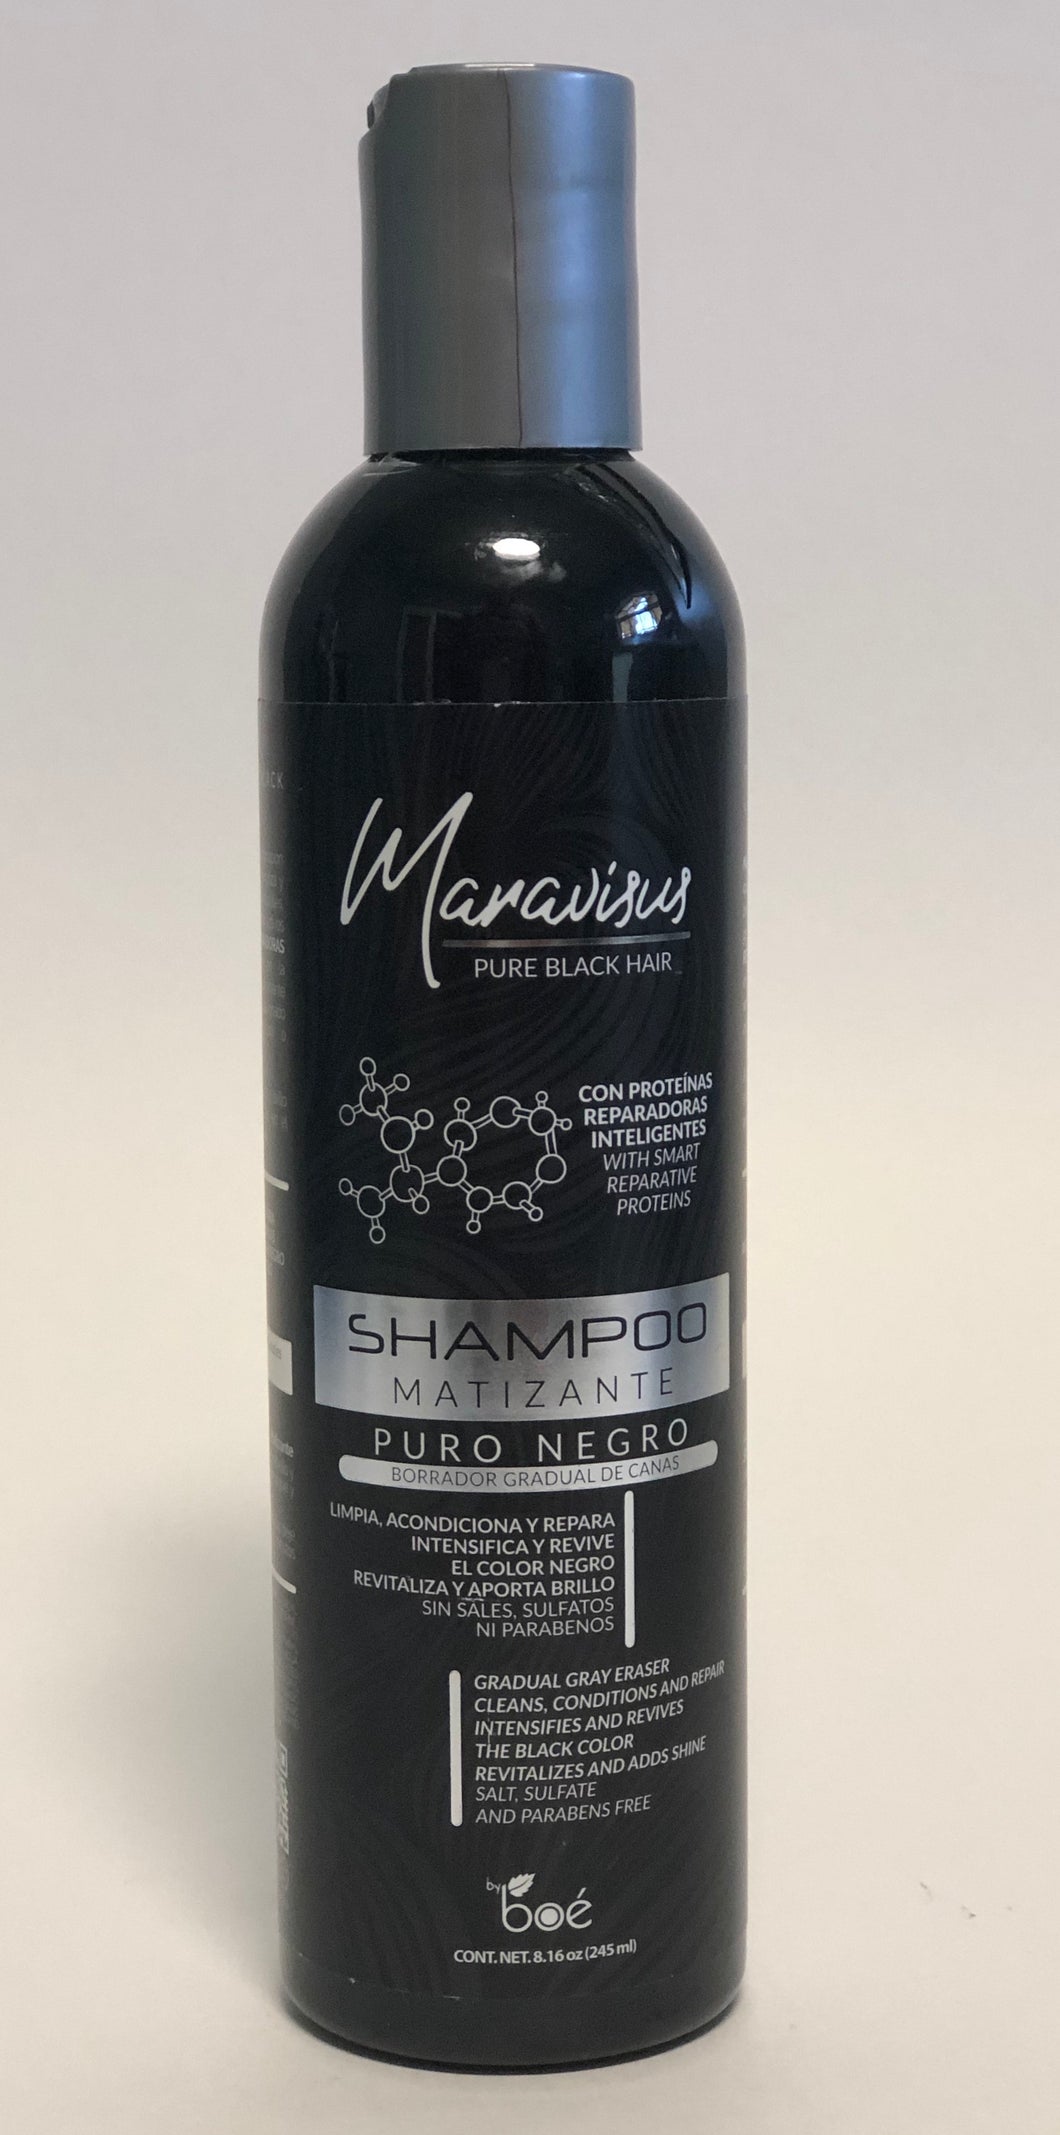 Maravisus Puro Negro Shampoo matizante